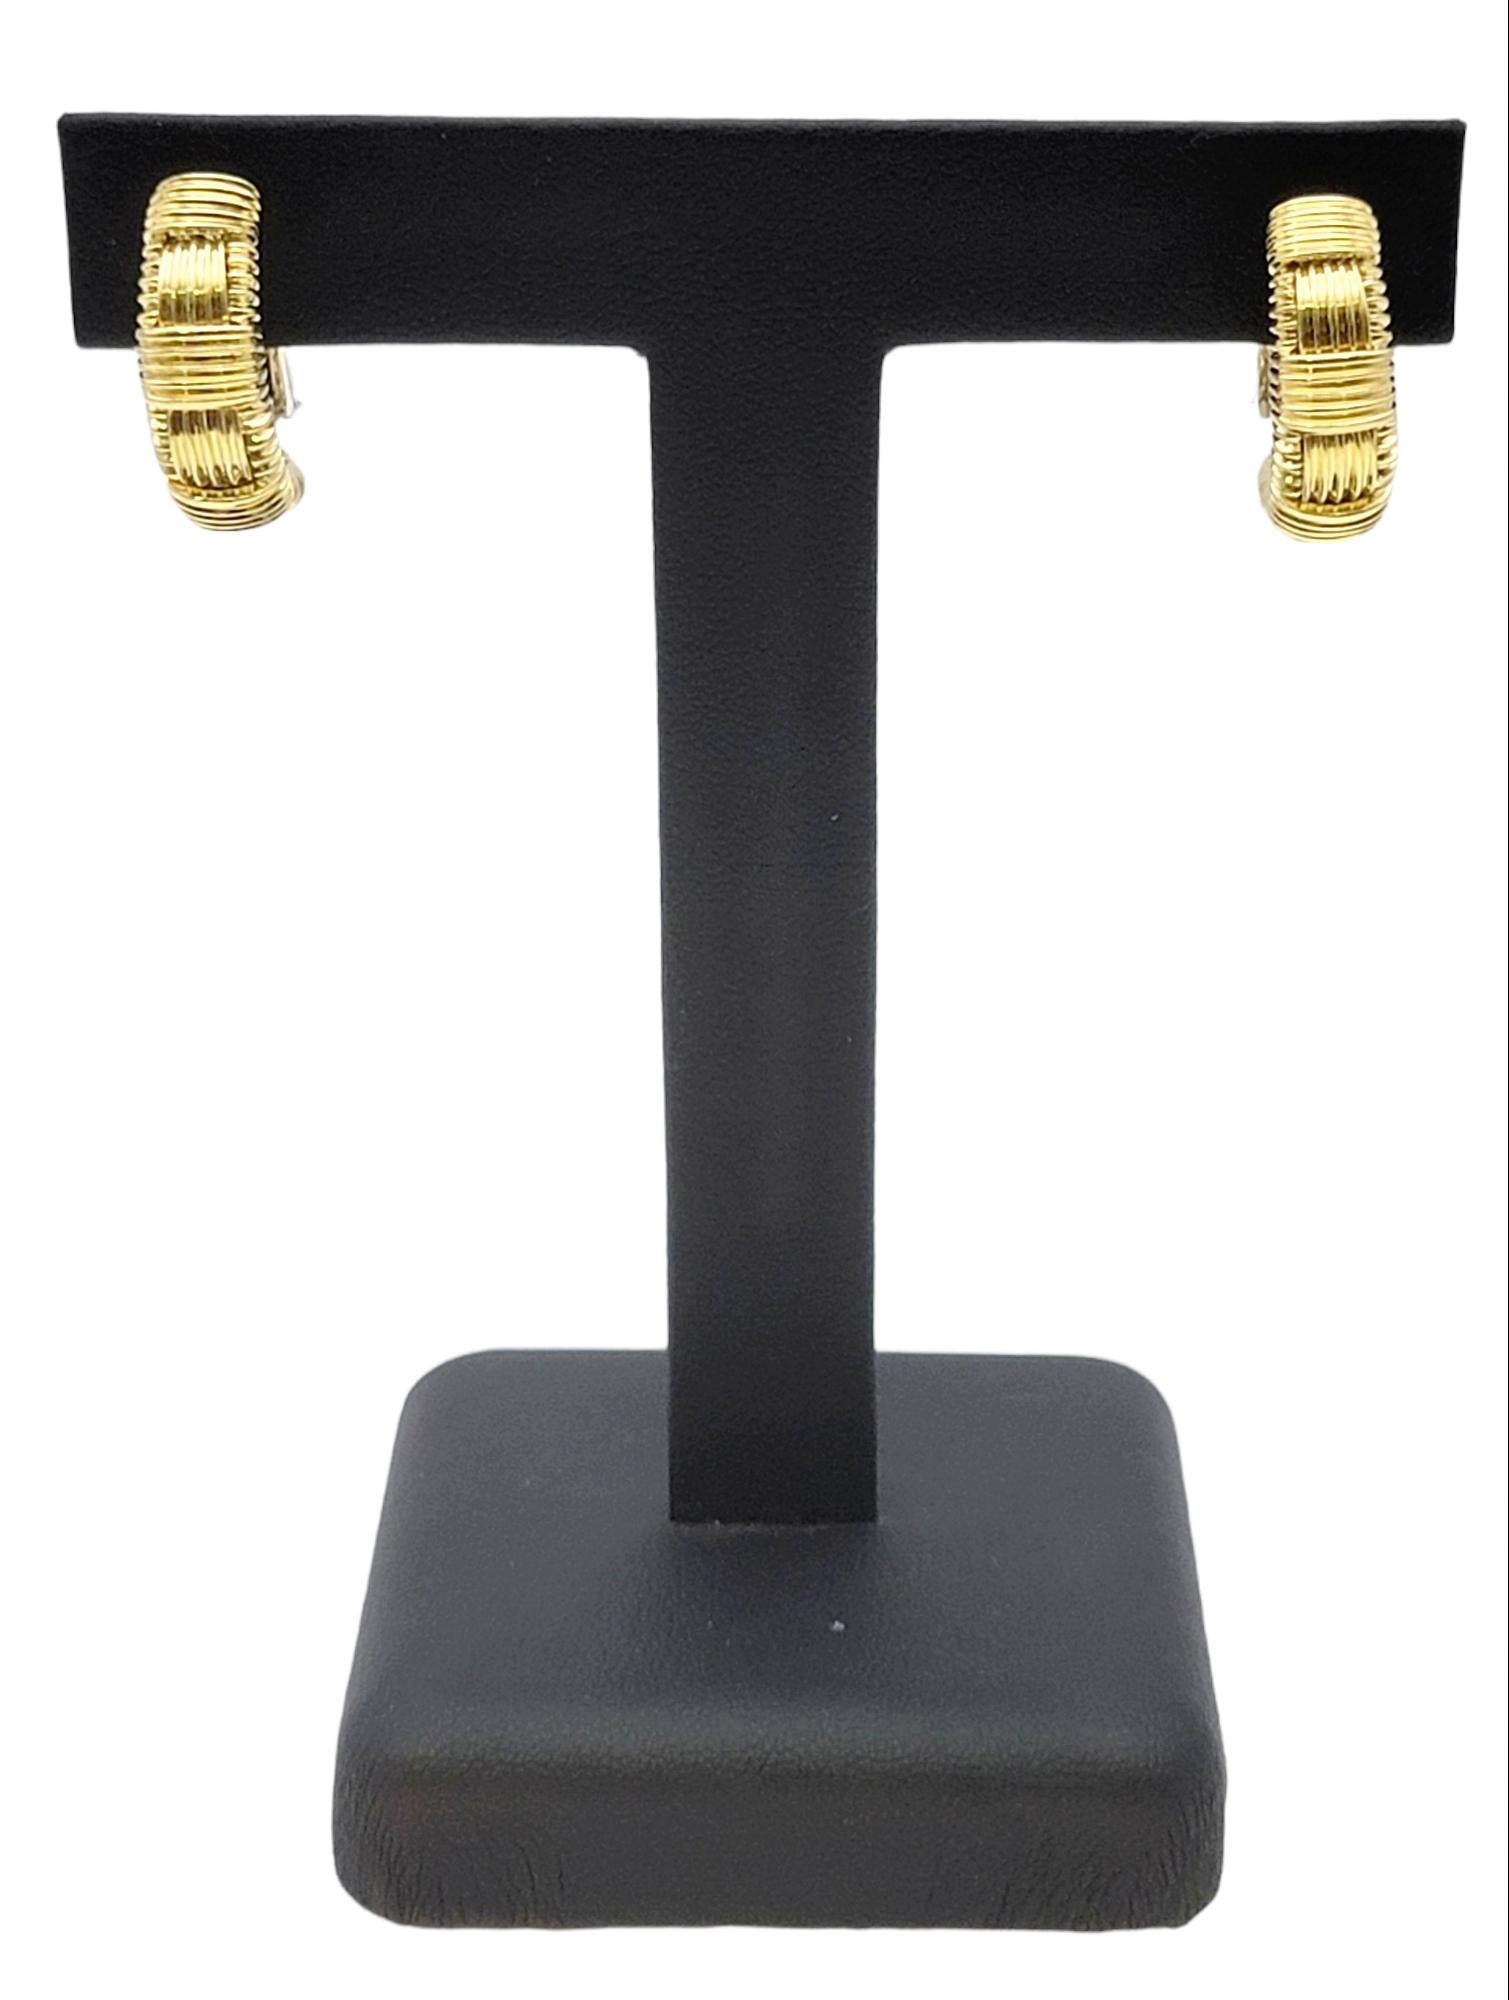 Roberto Coin Appassionata Textured Half Hoop Pierced Earrings in 18 Karat Gold For Sale 6